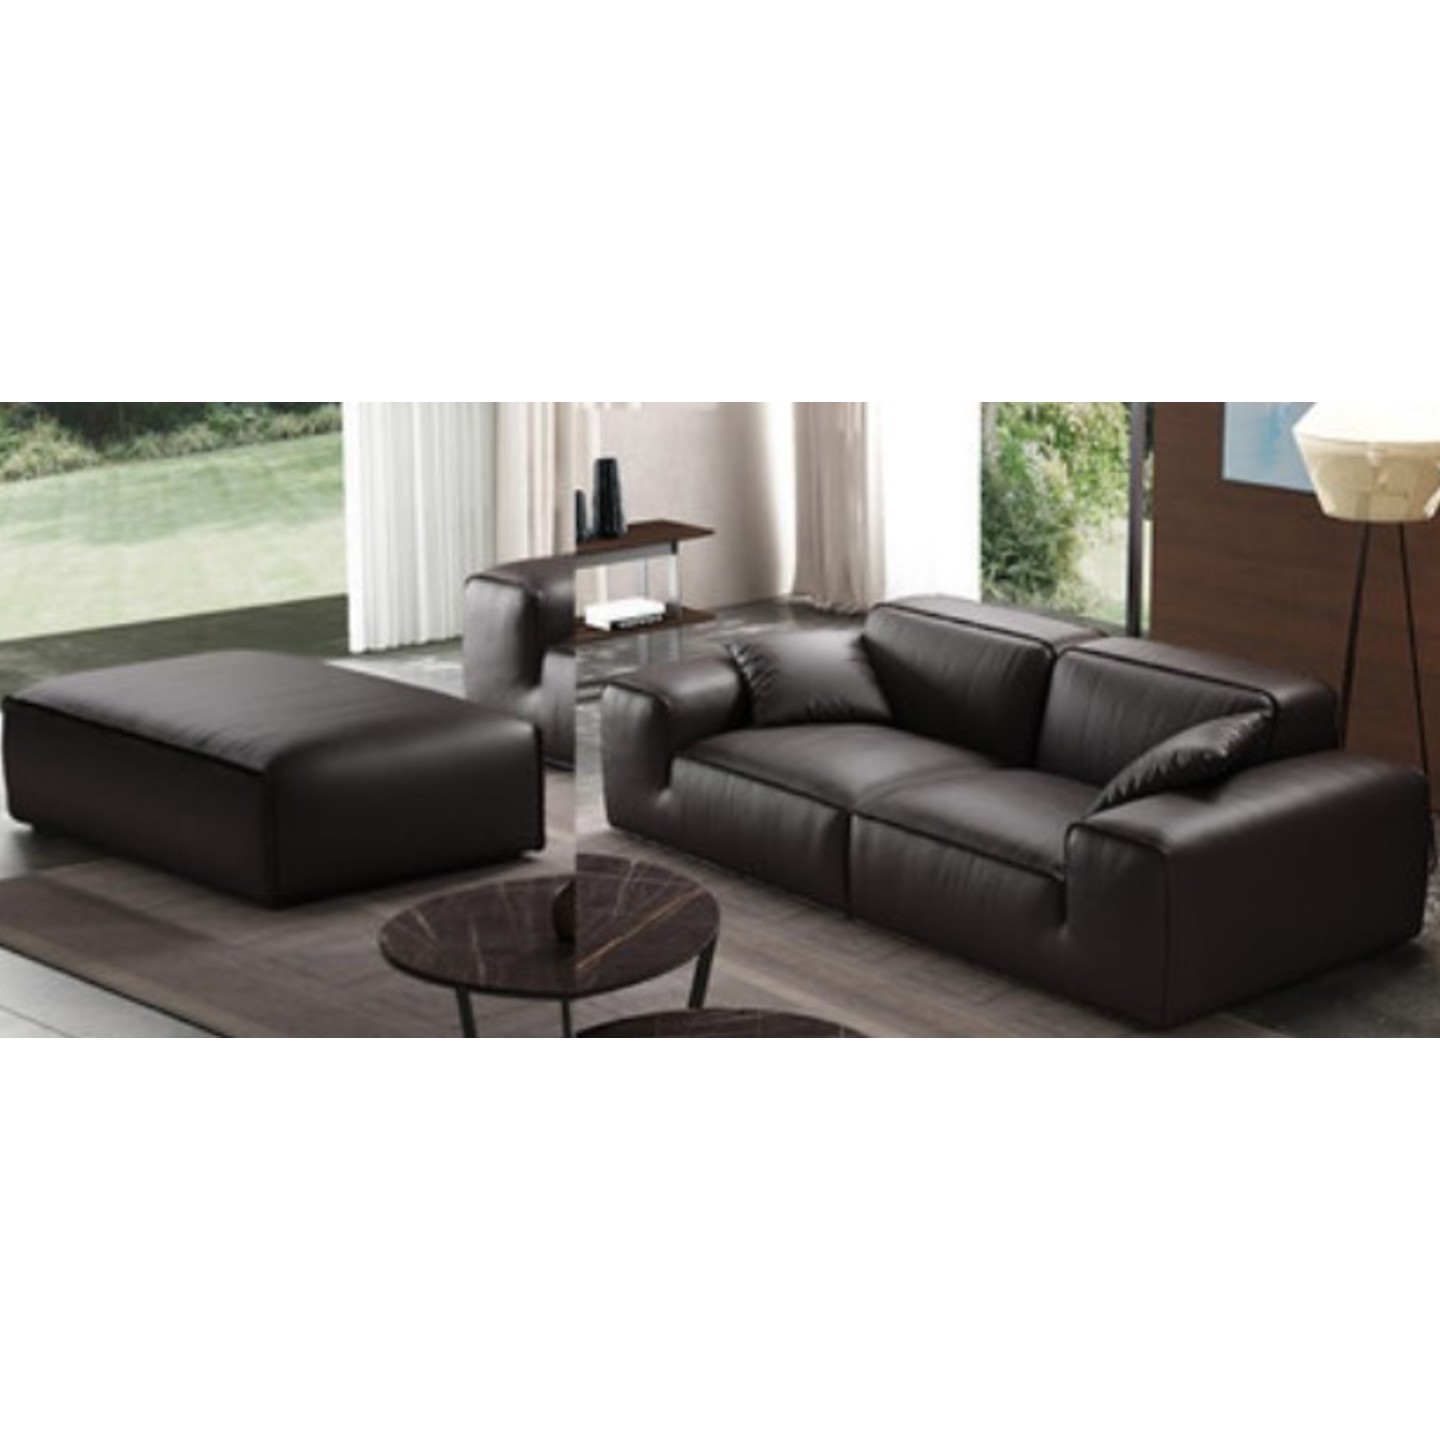 Merino Nordic Style Luxury Sofa Full Leather - Straight Four Seater 222cm + Leg Rest